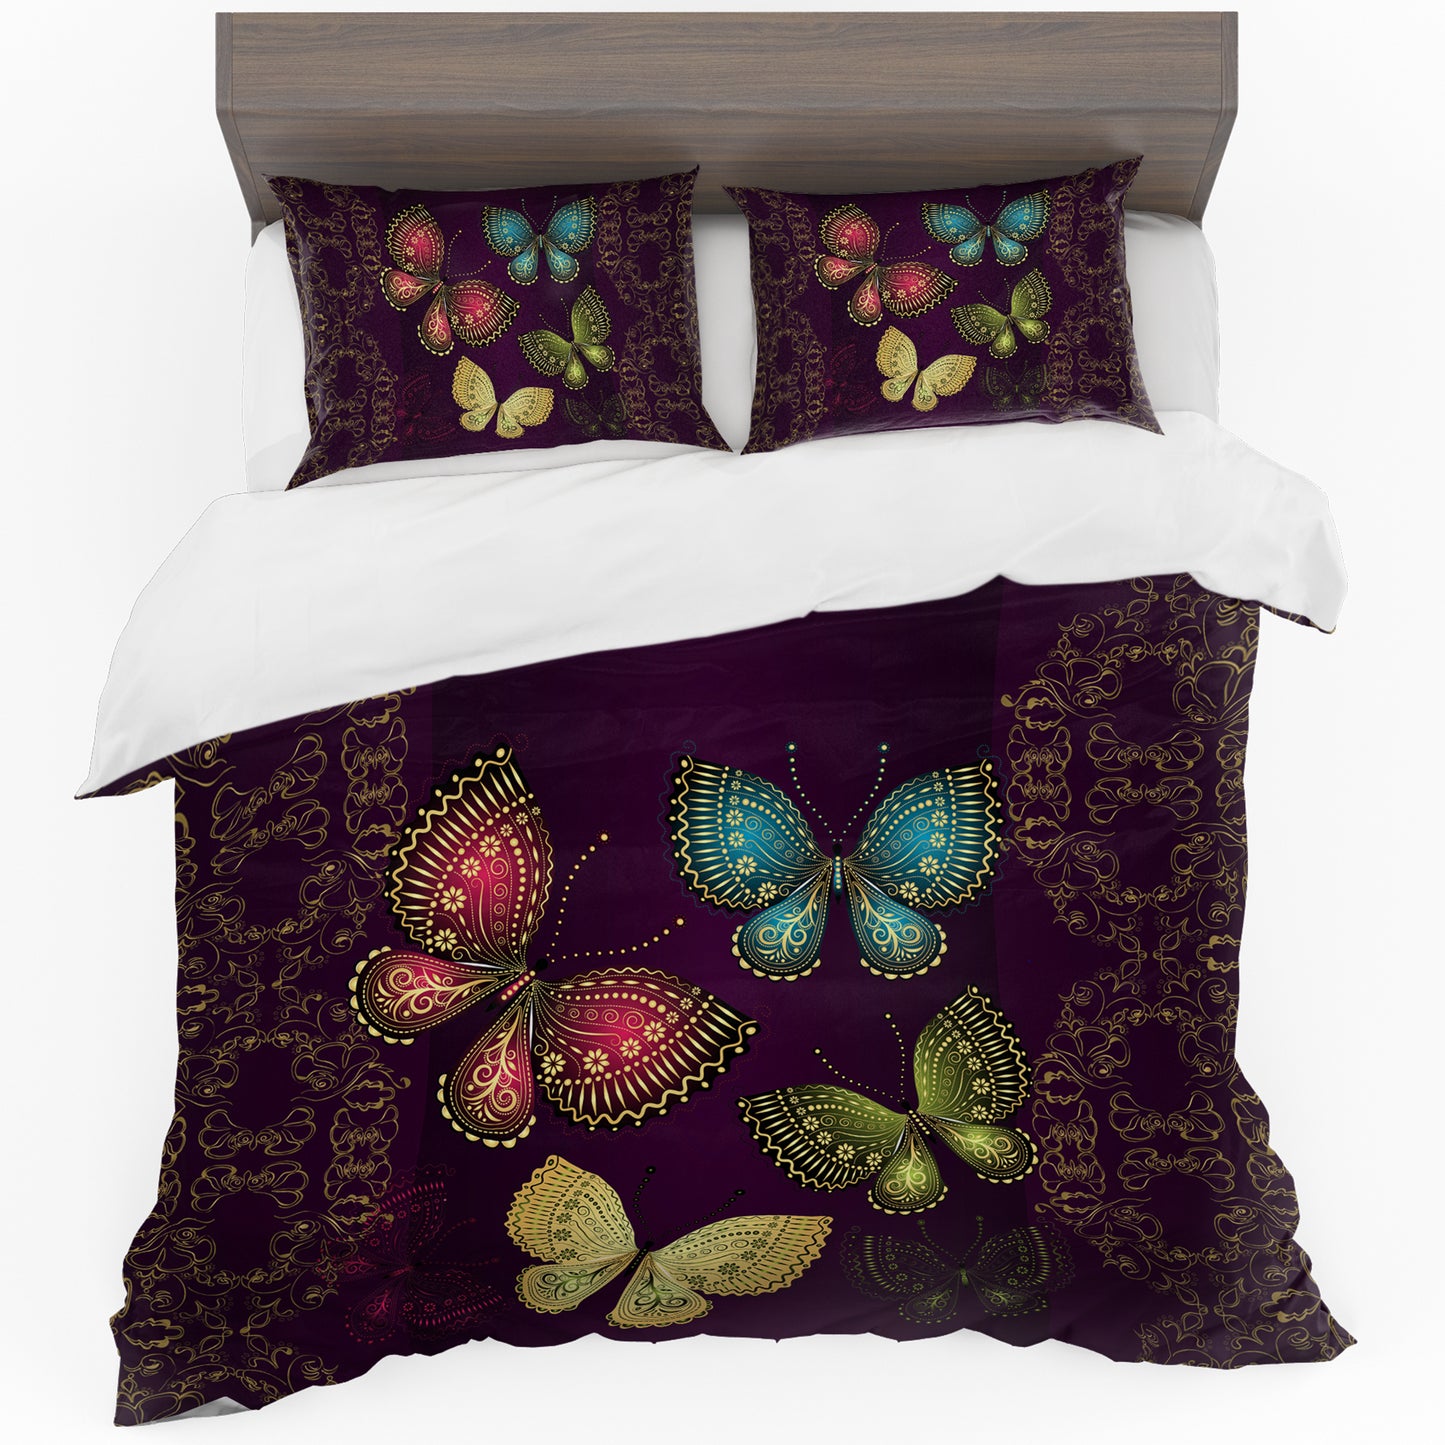 Butterflies on Violet Duvet Cover Set